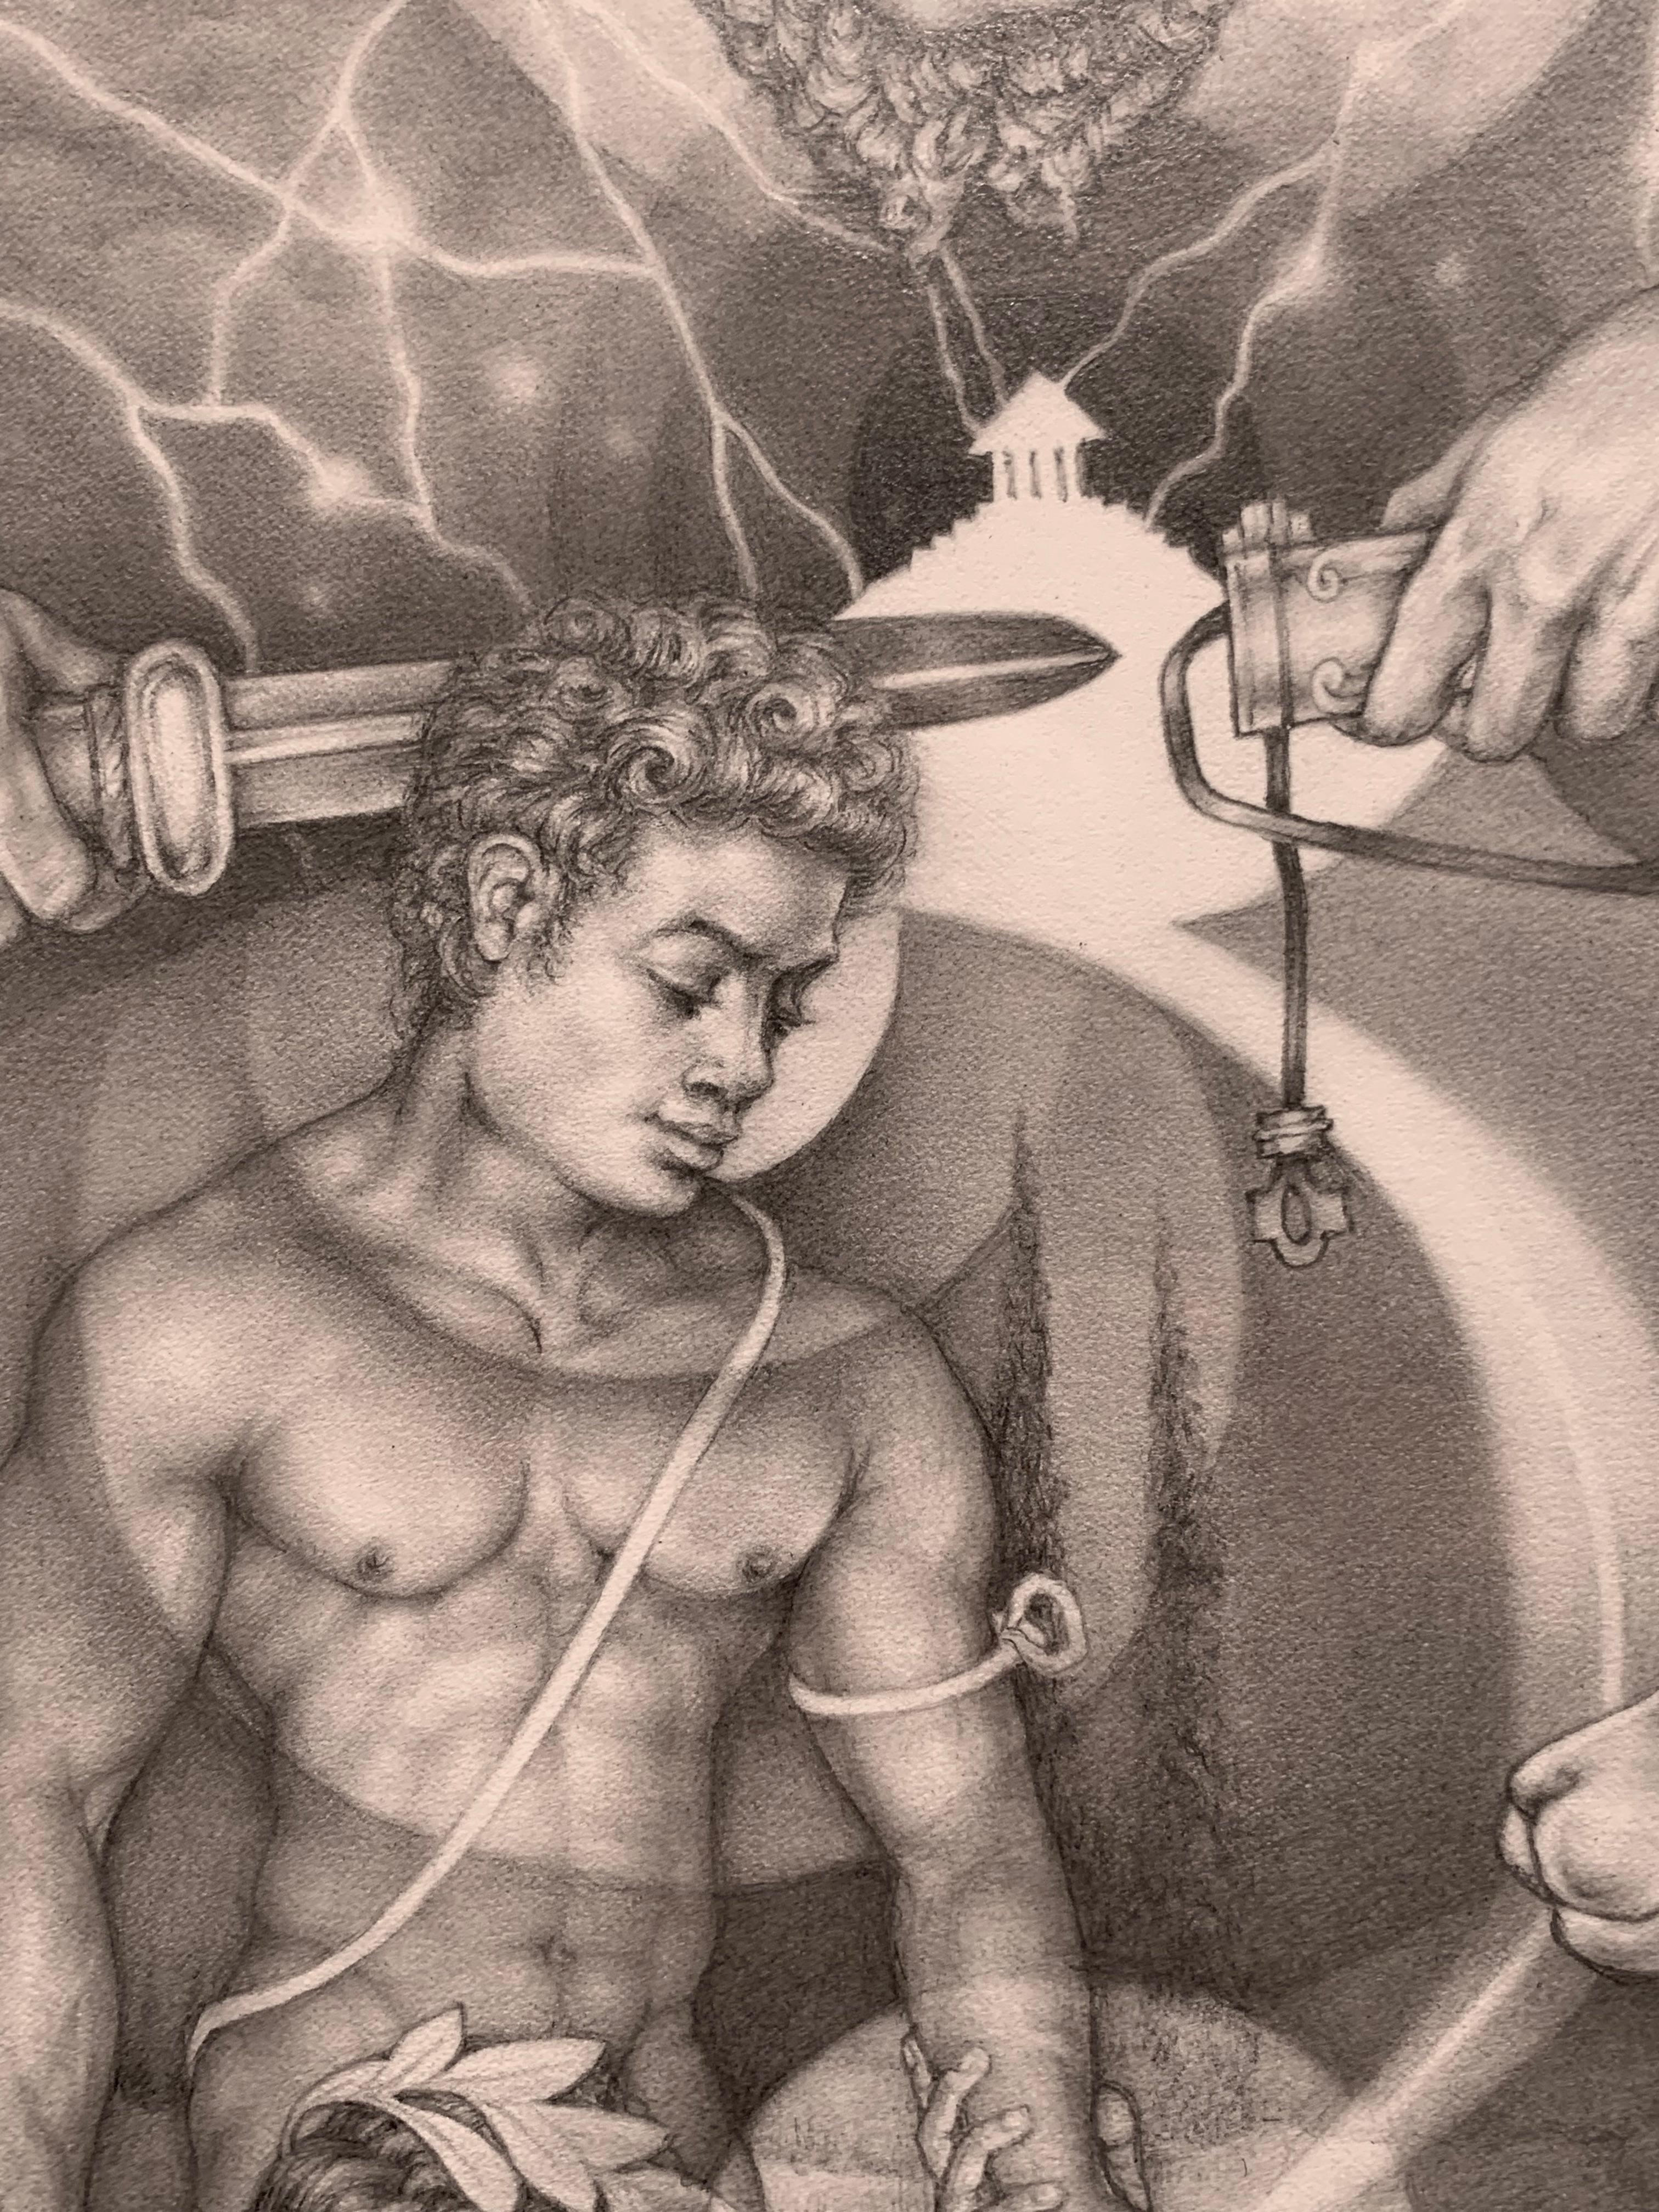 Spartan Warriors (male nude fantasy) - Realist Art by Robert Frederick Vorreyer